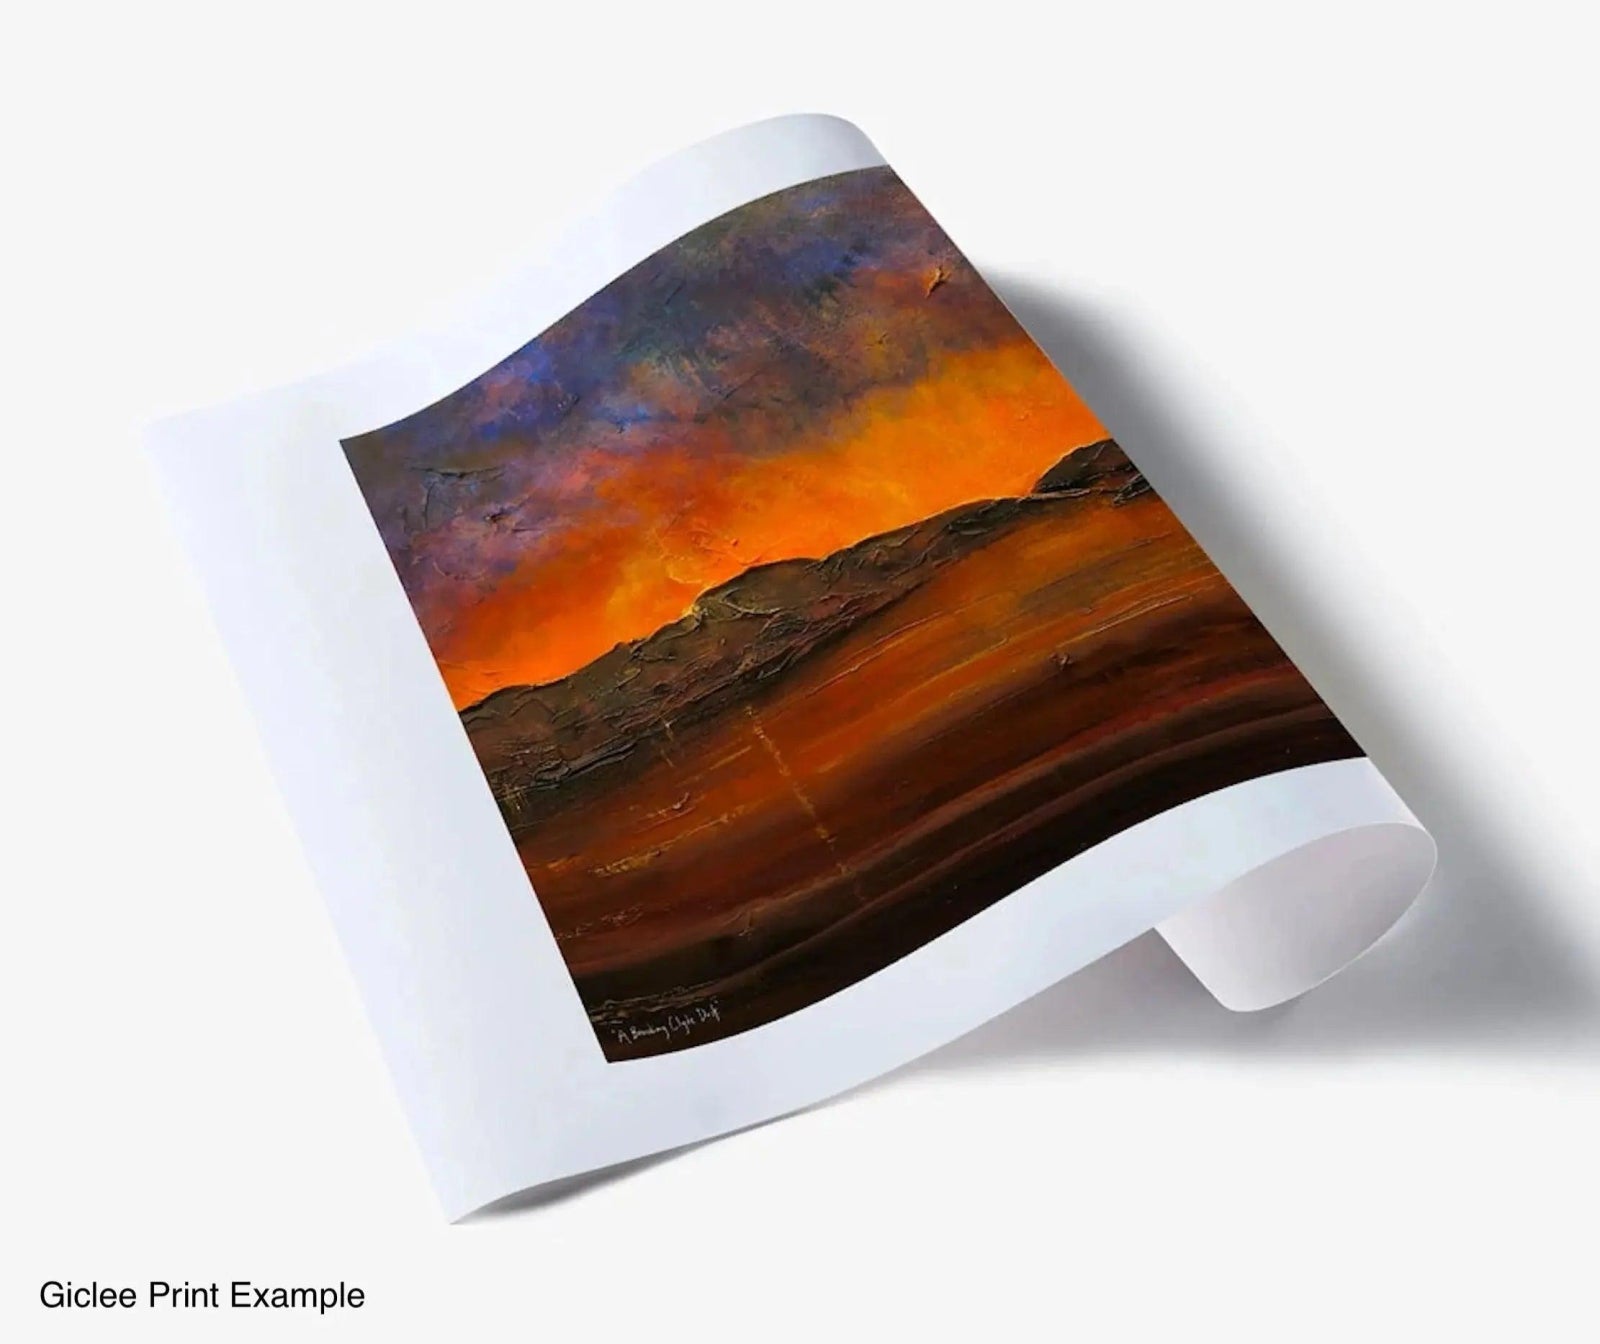 Cuillin Winter Skye-Panoramic Prints-Skye Art Gallery-Paintings, Prints, Homeware, Art Gifts From Scotland By Scottish Artist Kevin Hunter